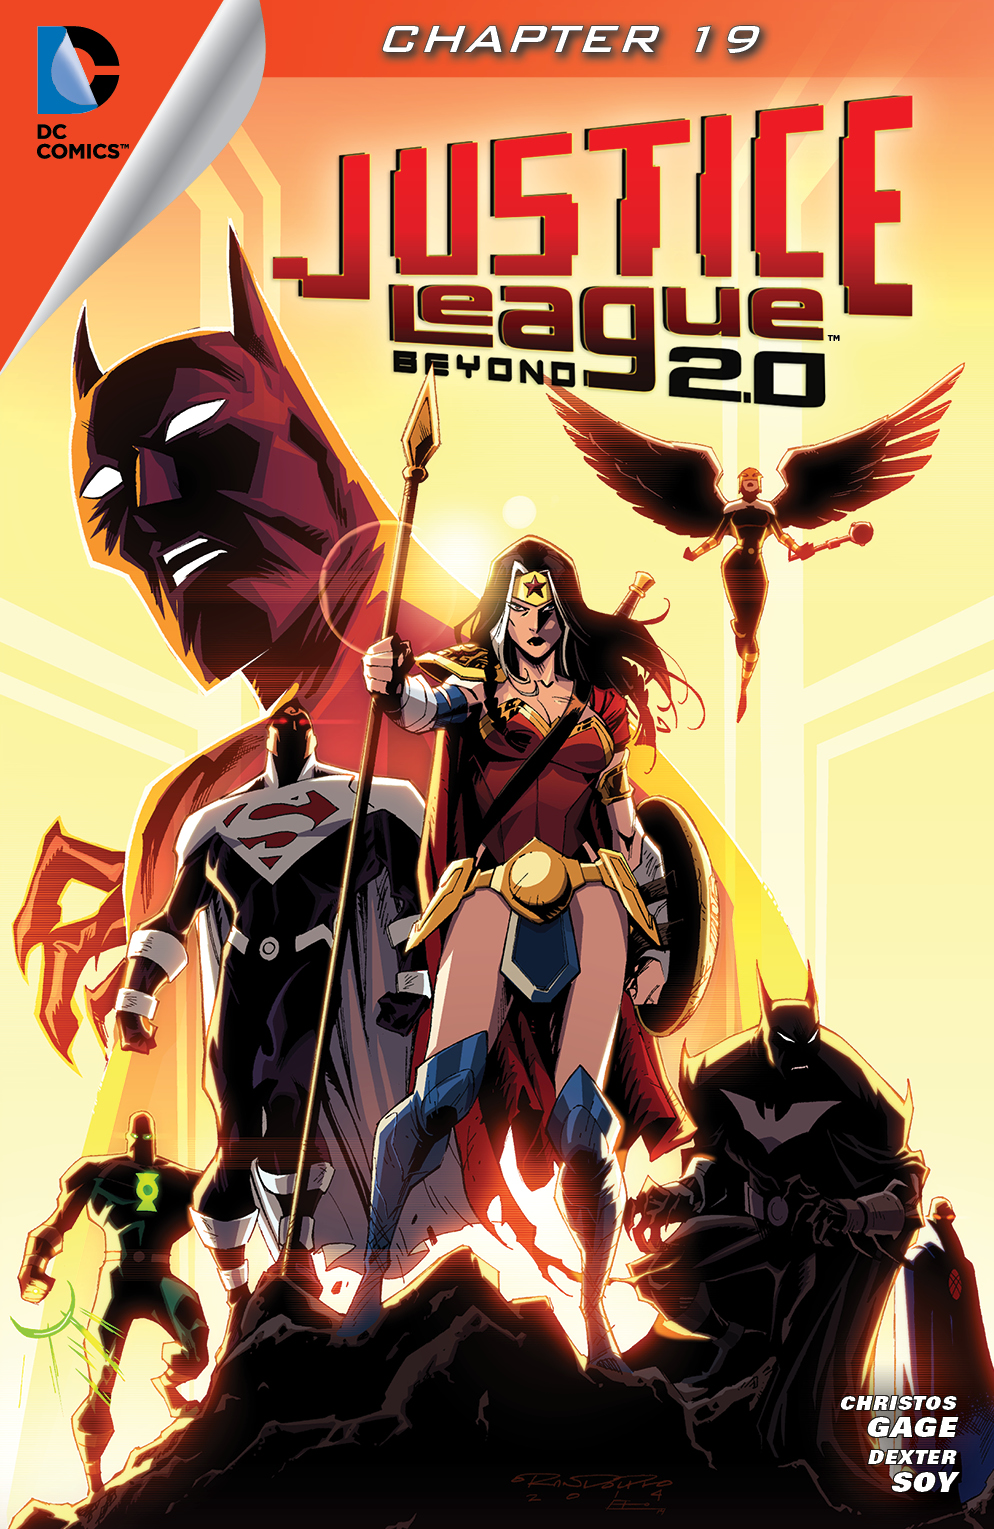 Justice League Beyond 2.0 #19 preview images